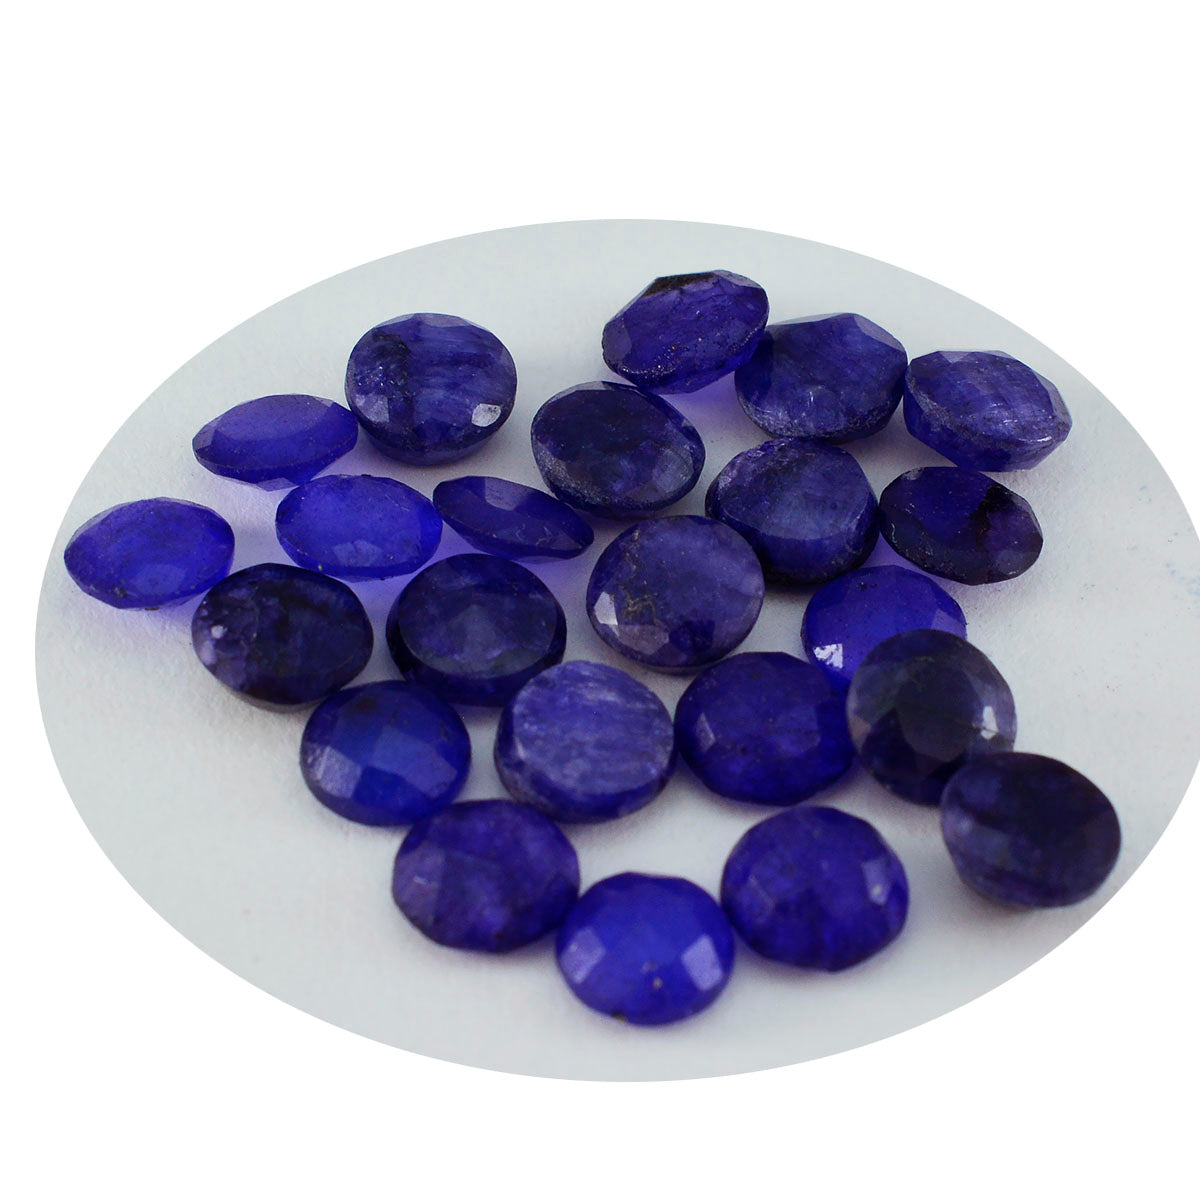 riyogems 1 шт. натуральная синяя яшма граненая 5x5 мм круглая форма красивый качественный камень